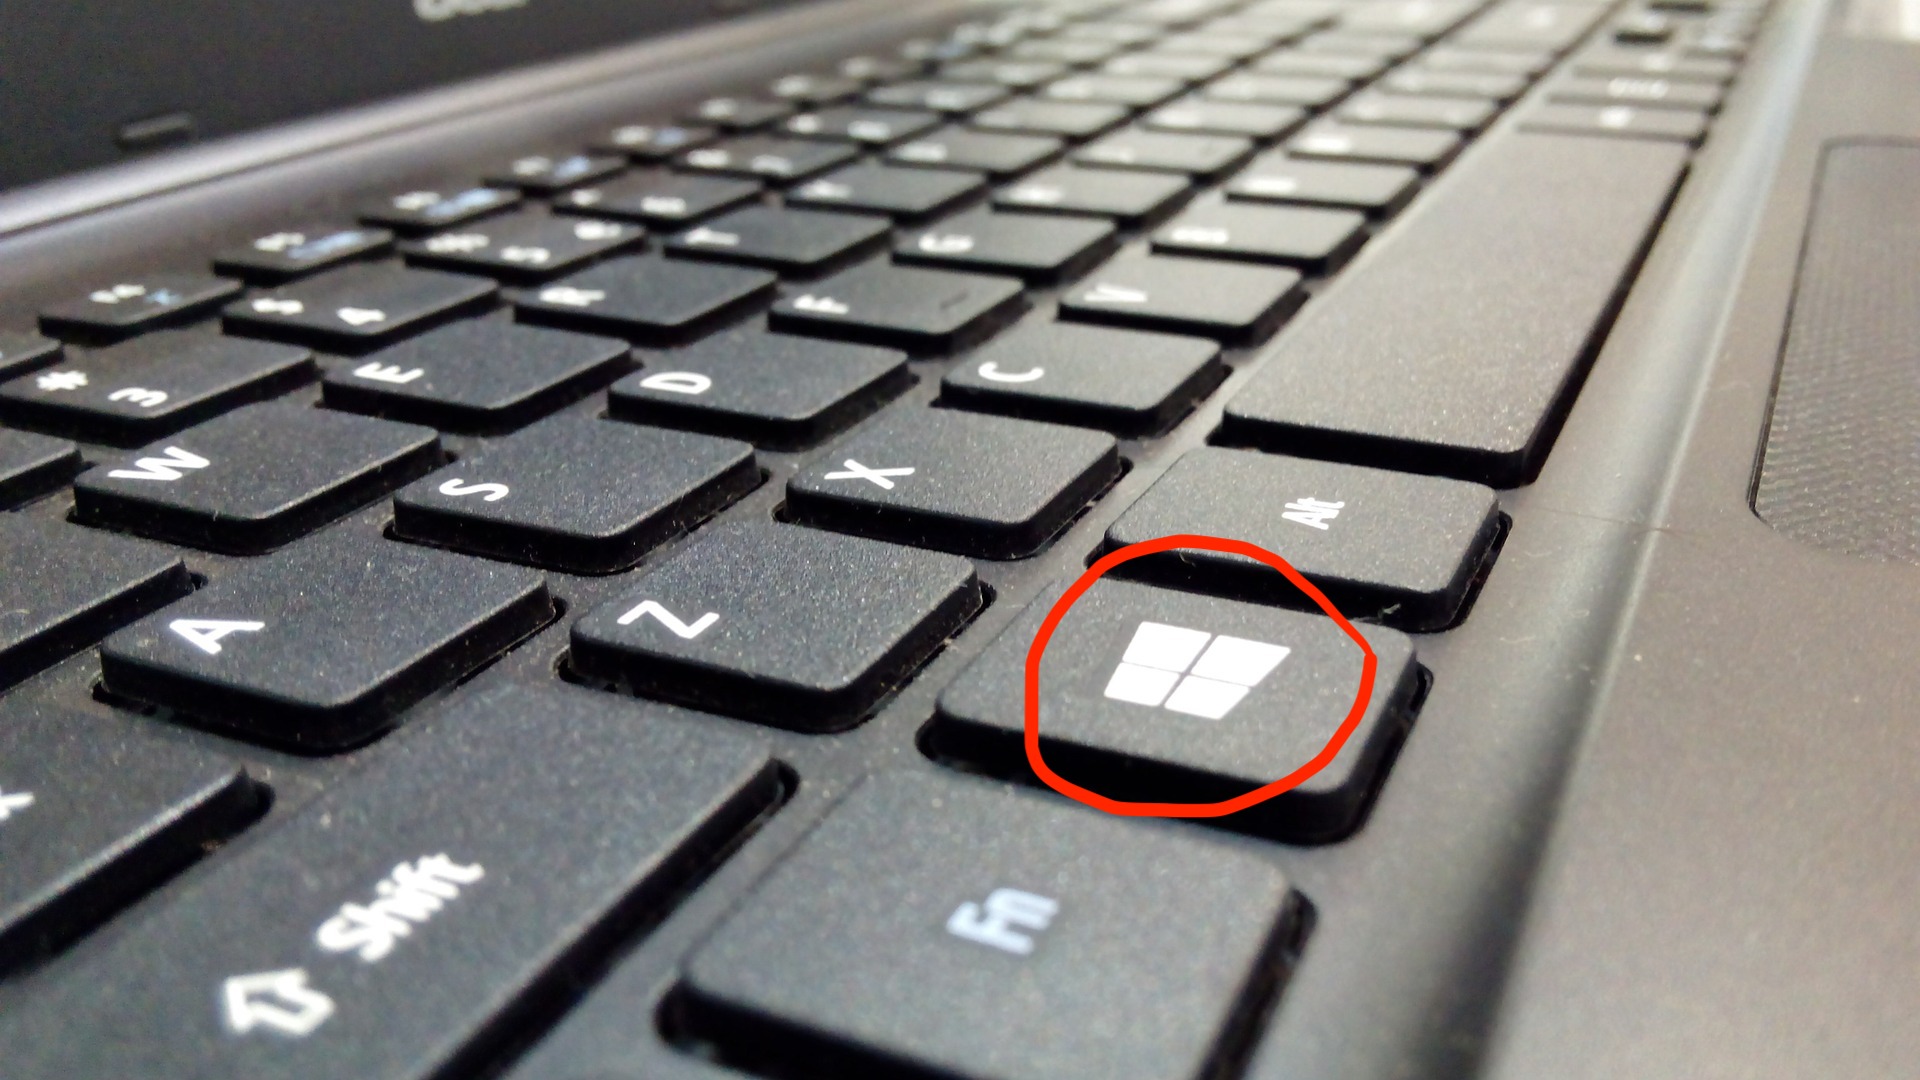 Windows Key computer keyboard